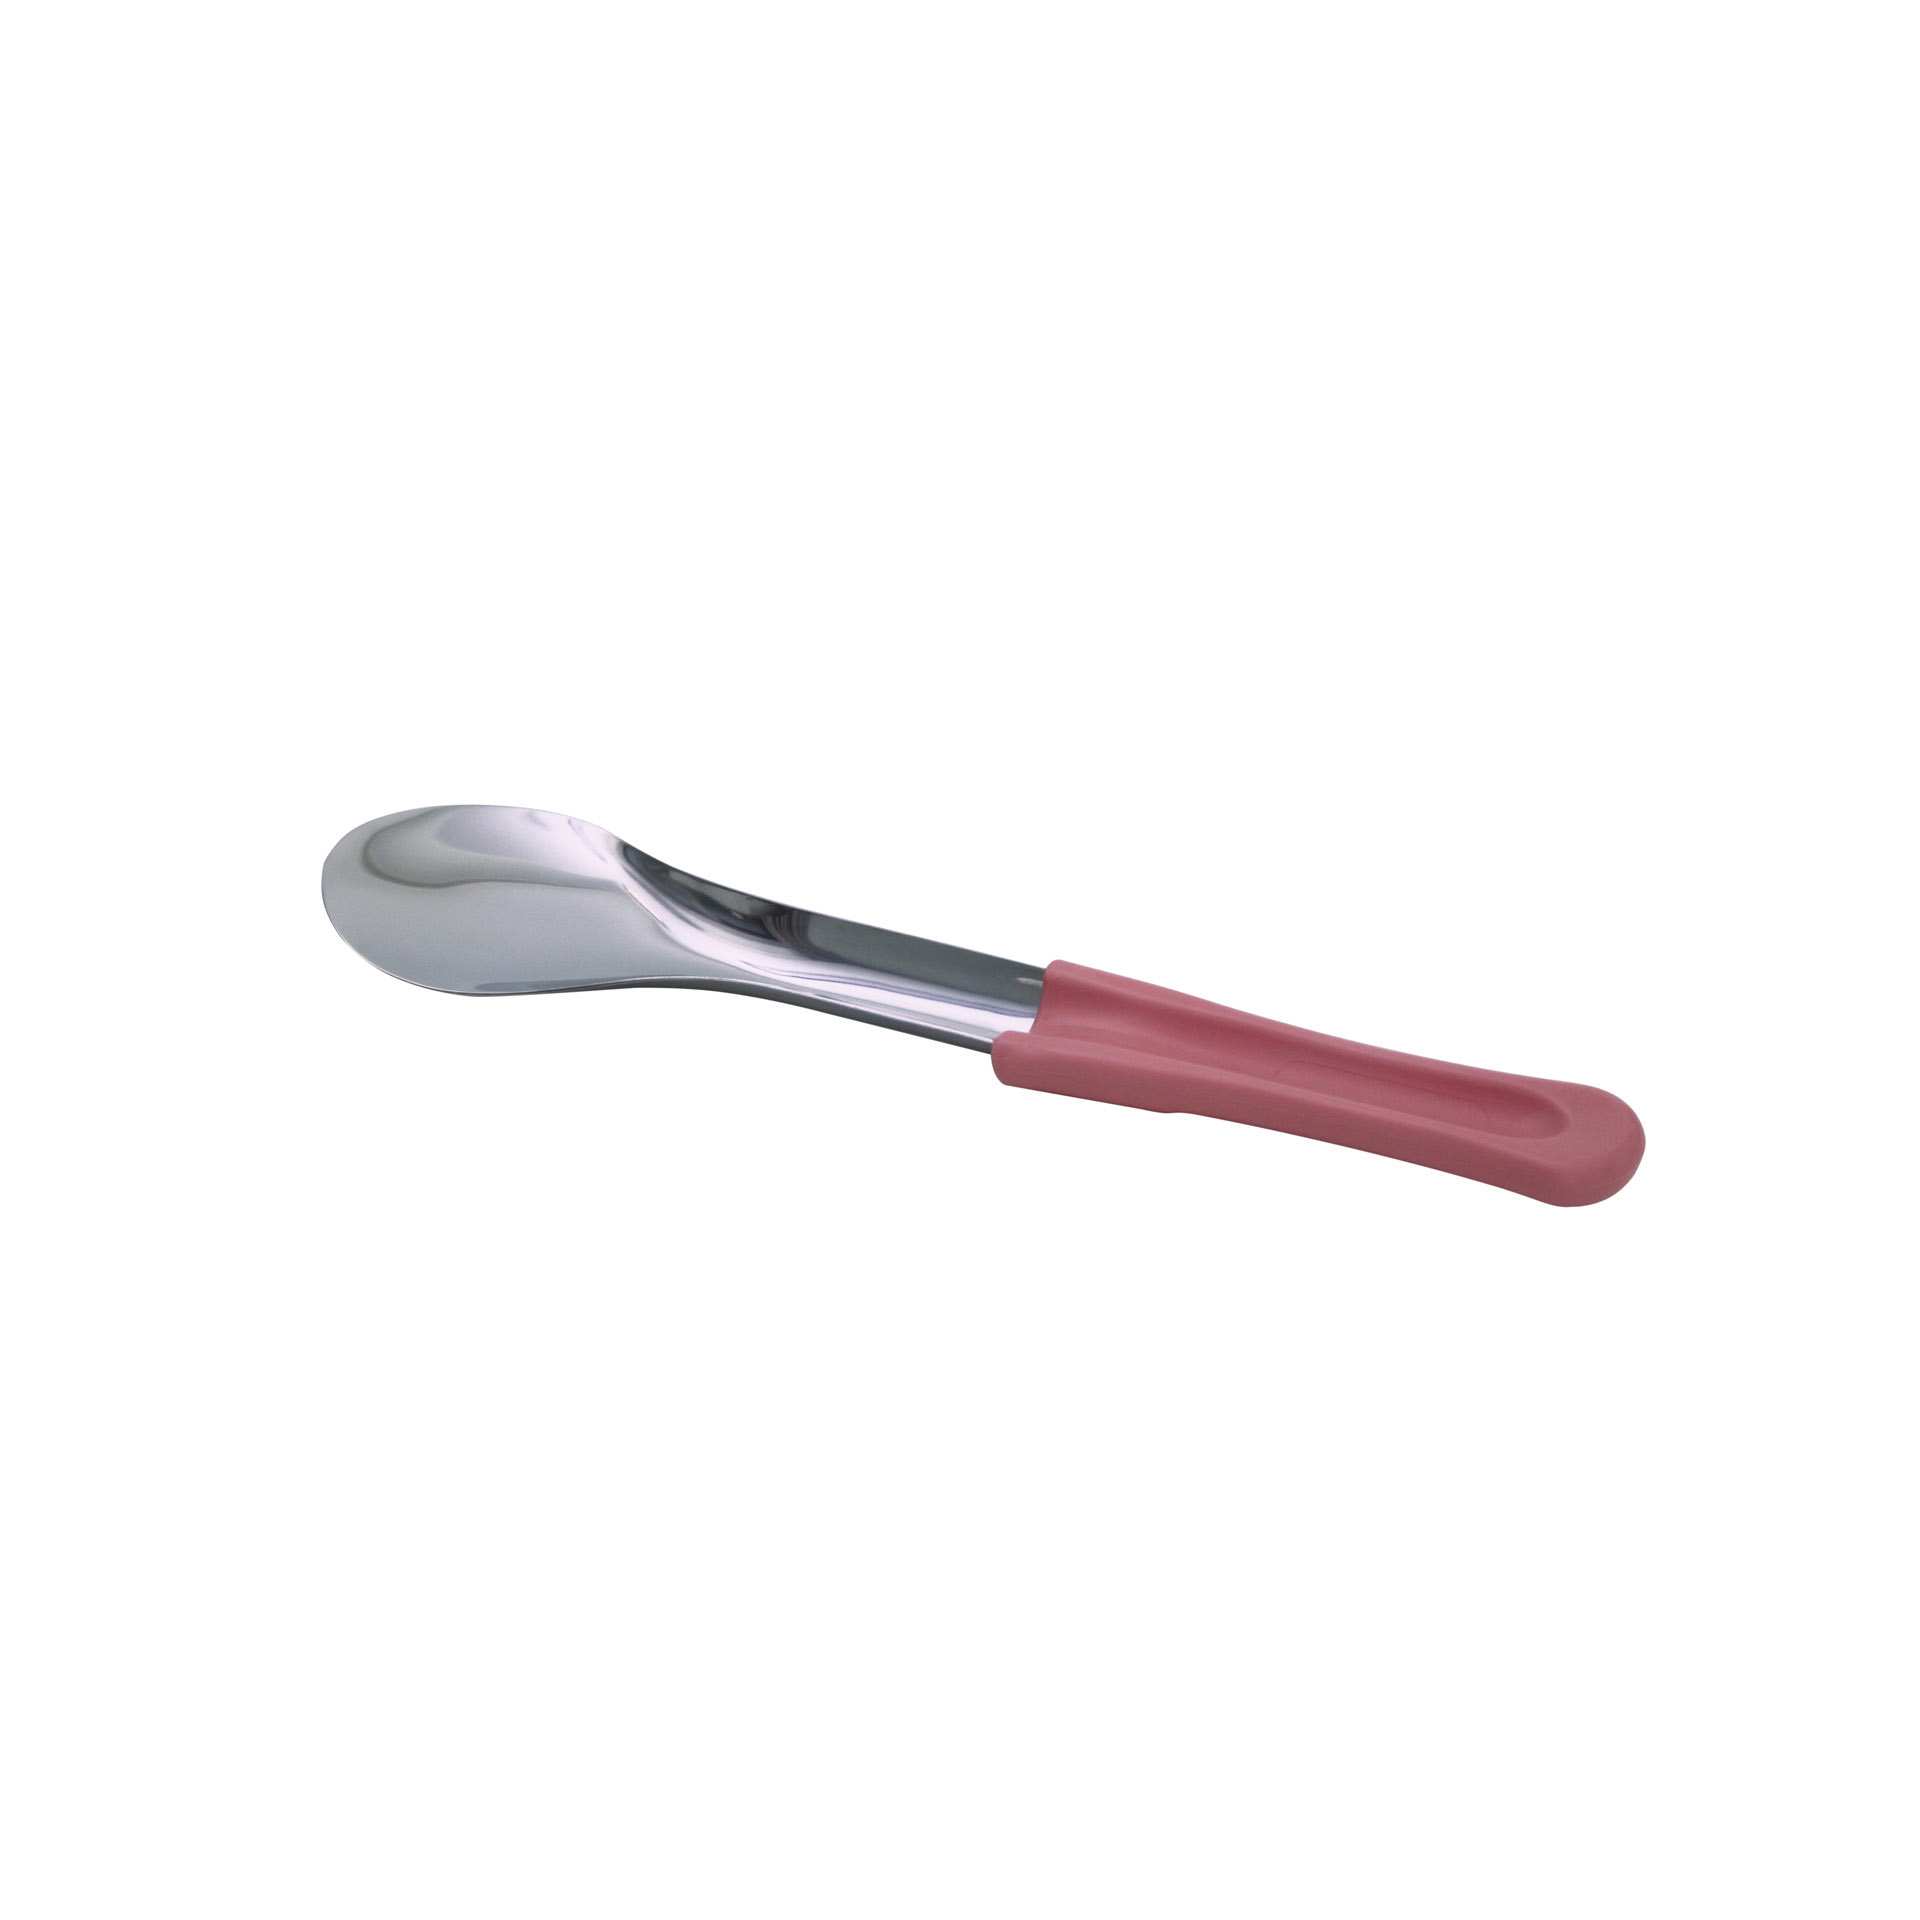 Eisspachtel - mit Kunststoffgriff - rosa - Abm. 30,0 x 6,5 x 1,5 cm - Edelstahl - 195190-C